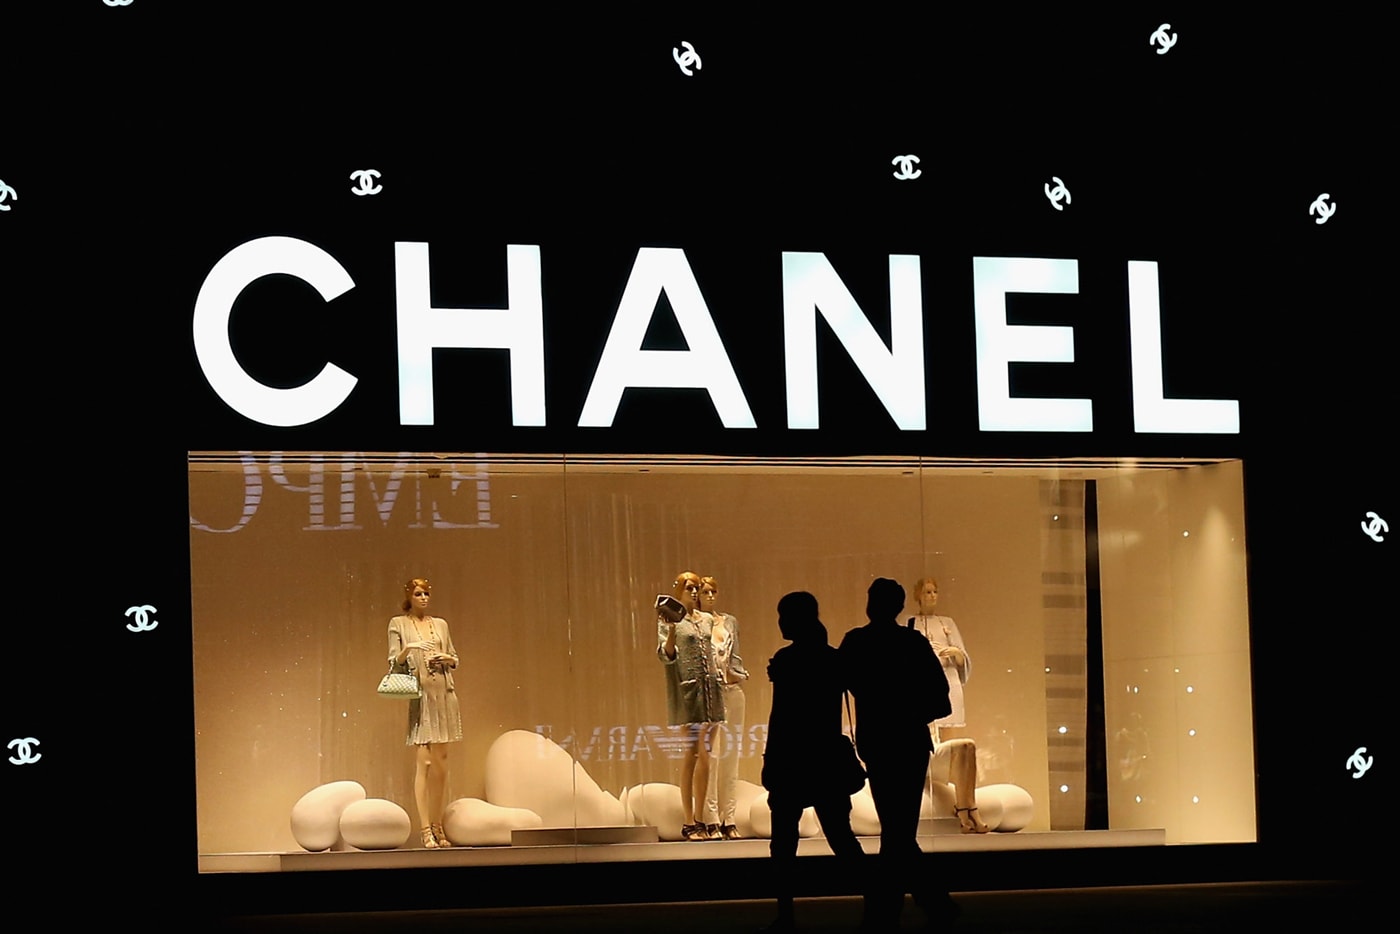 Chanel Apple Music Beats1 Curated Playlists Sound of Chanel Soundtracks Pharrell Williams Michel Gaubert Caroline de Maigret Sébastien Tellier Ibeyi,